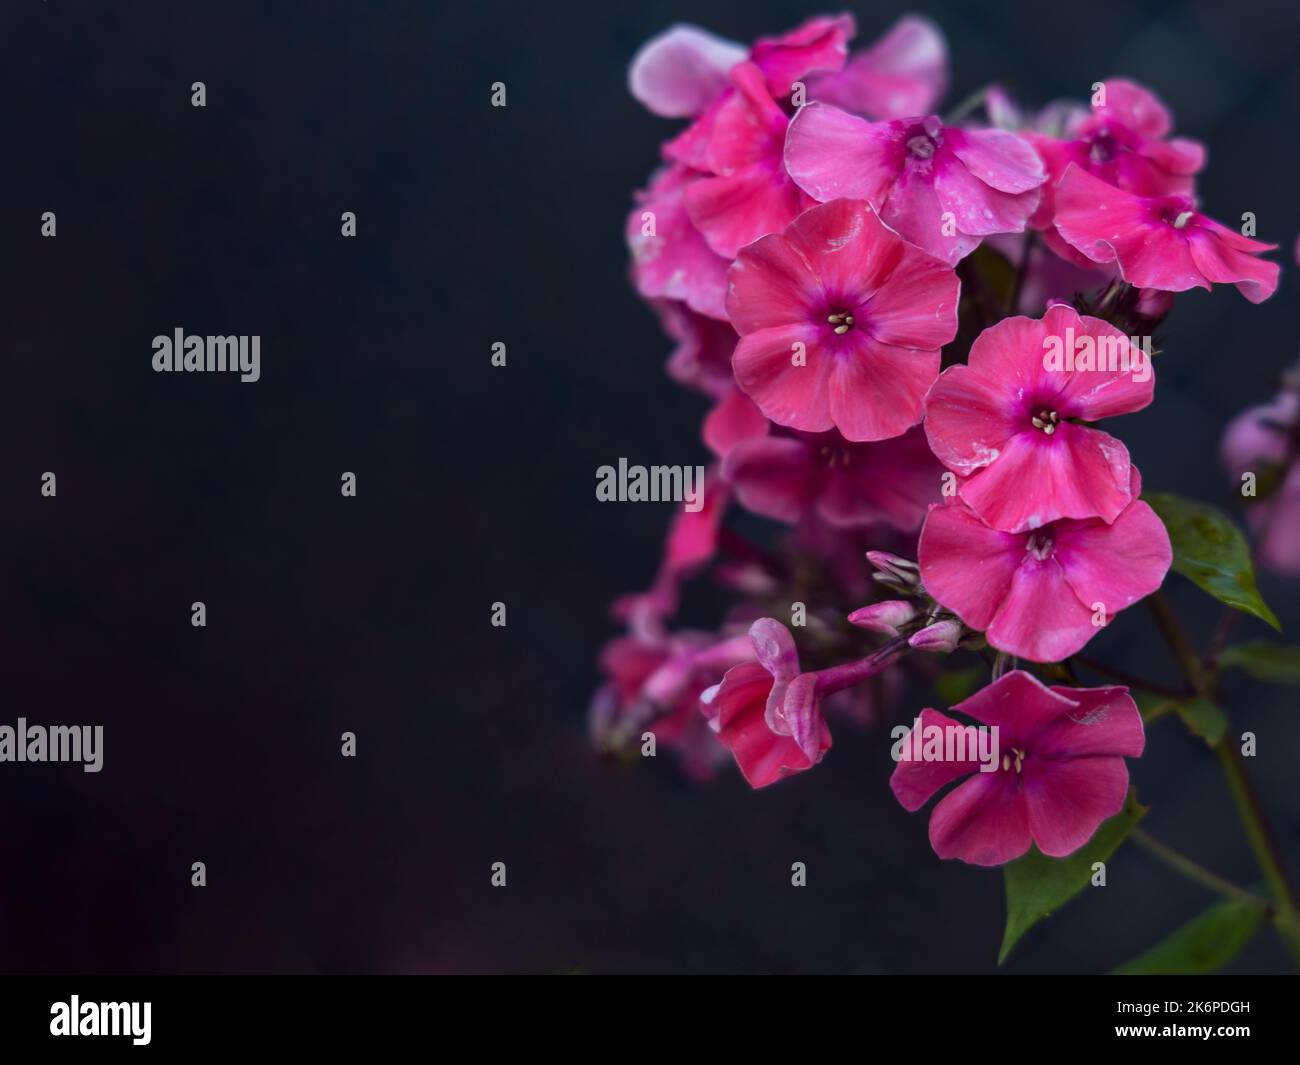 Pink garden phlox (Phlox paniculata), also called summer phlox, on dark background Stock Photo